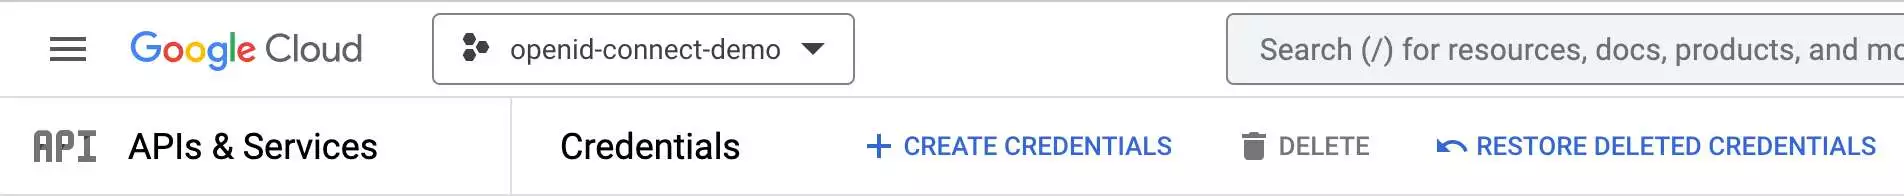 Google Cloud - Create Credentials button